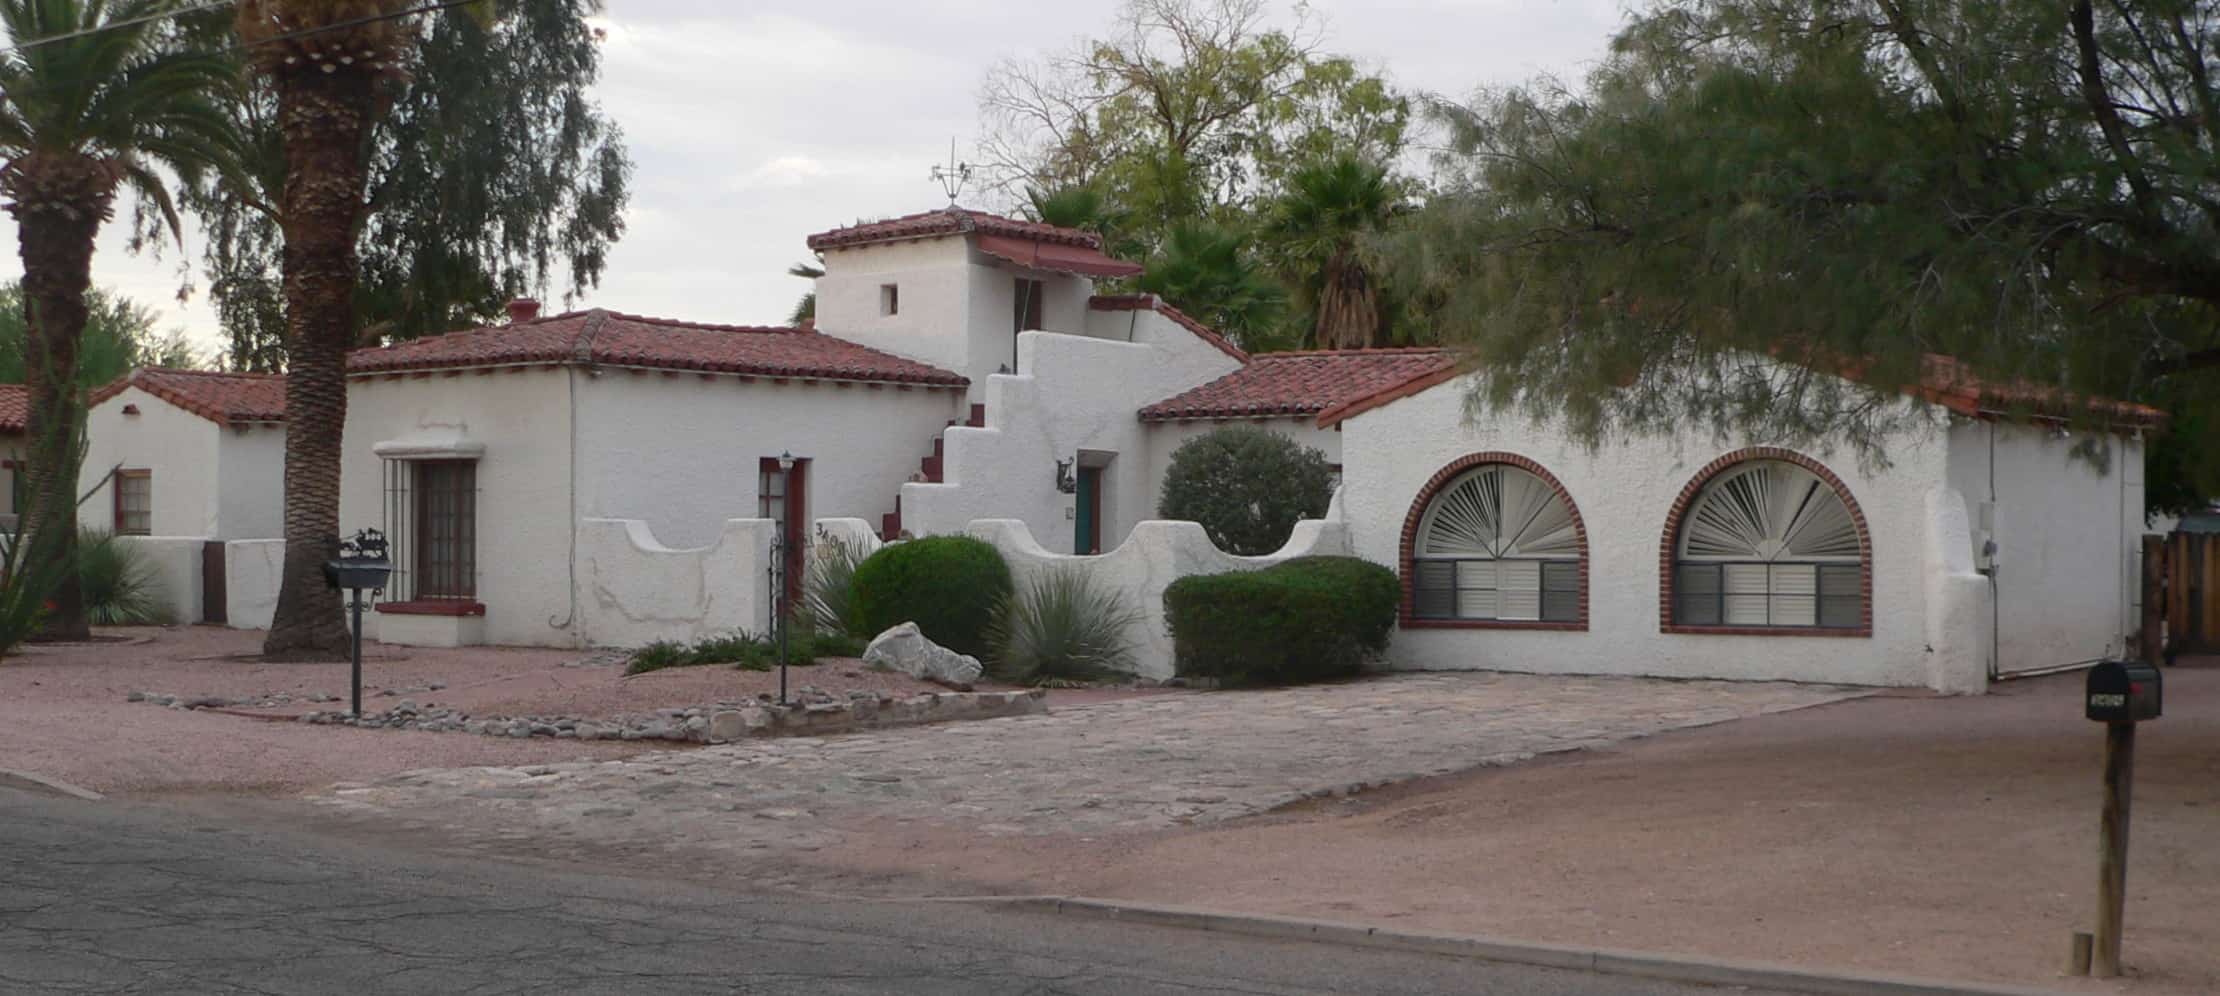 a home in Tuczon, Arizona